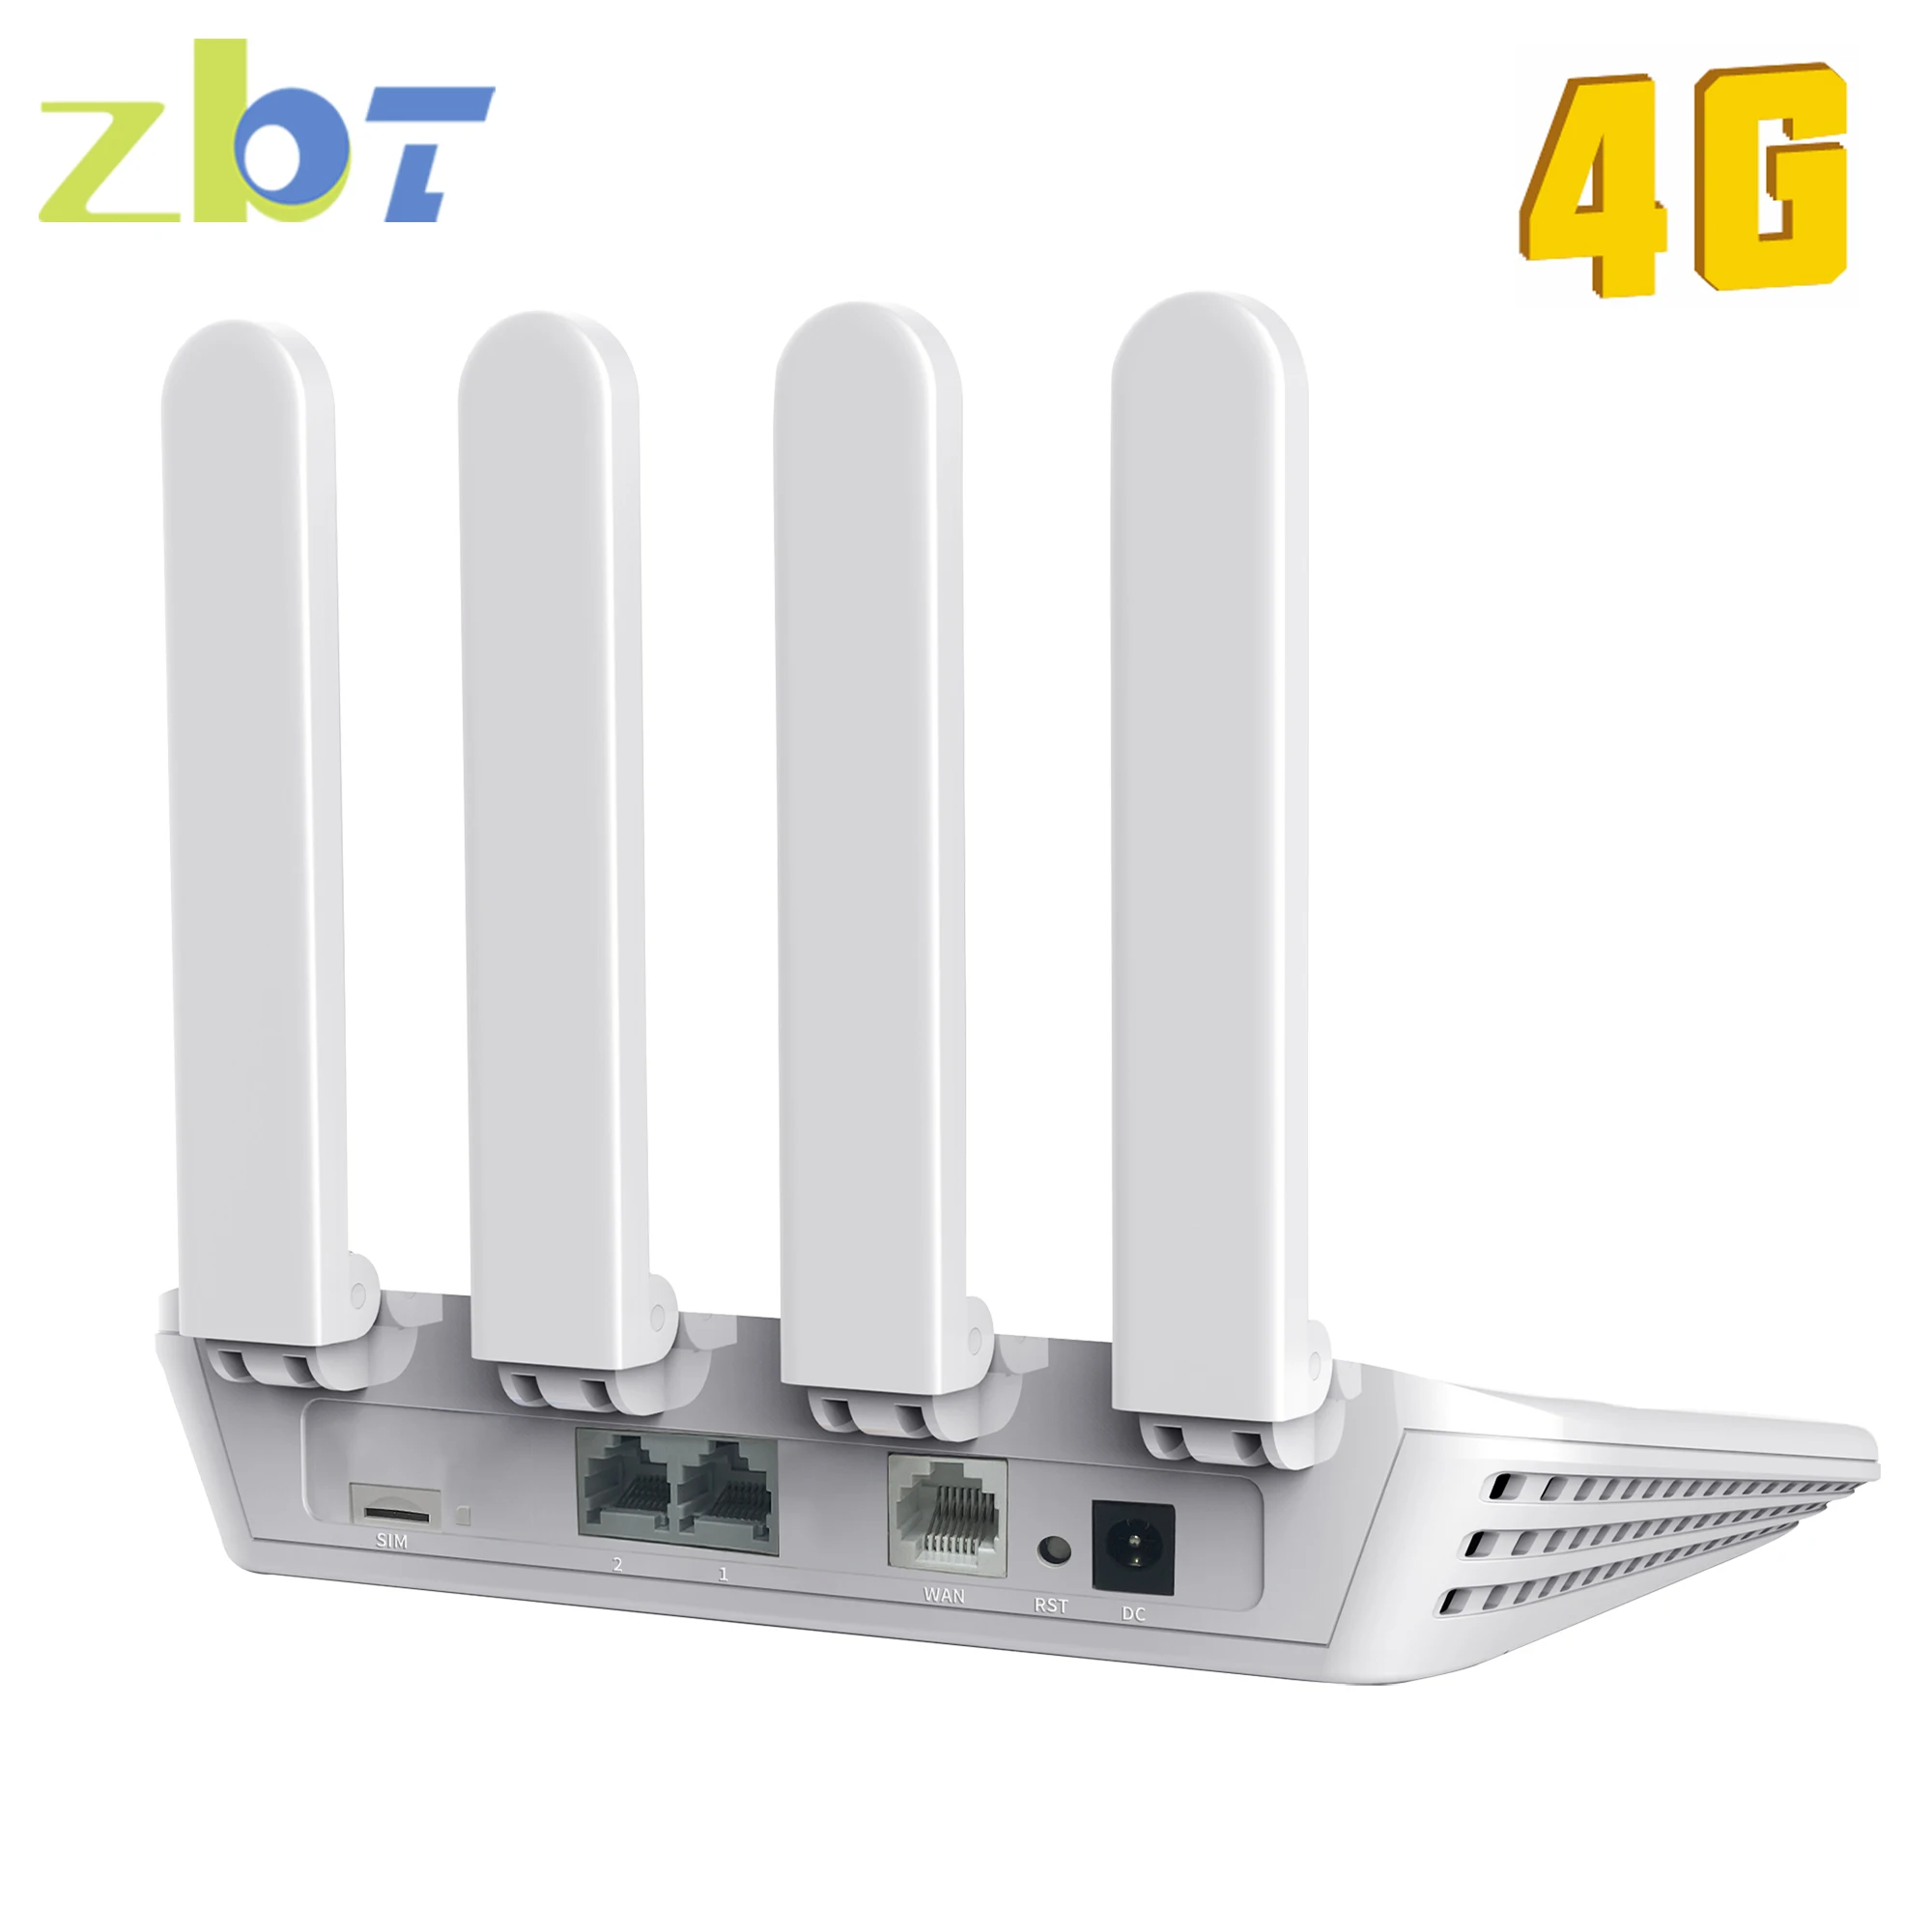 ZBT LTE 4G Wifi Router SIM Card Slot RJ45 LAN EC200T-EU Modem 300Mbps Wireless Roteador Frequency Range B28 B20 B8